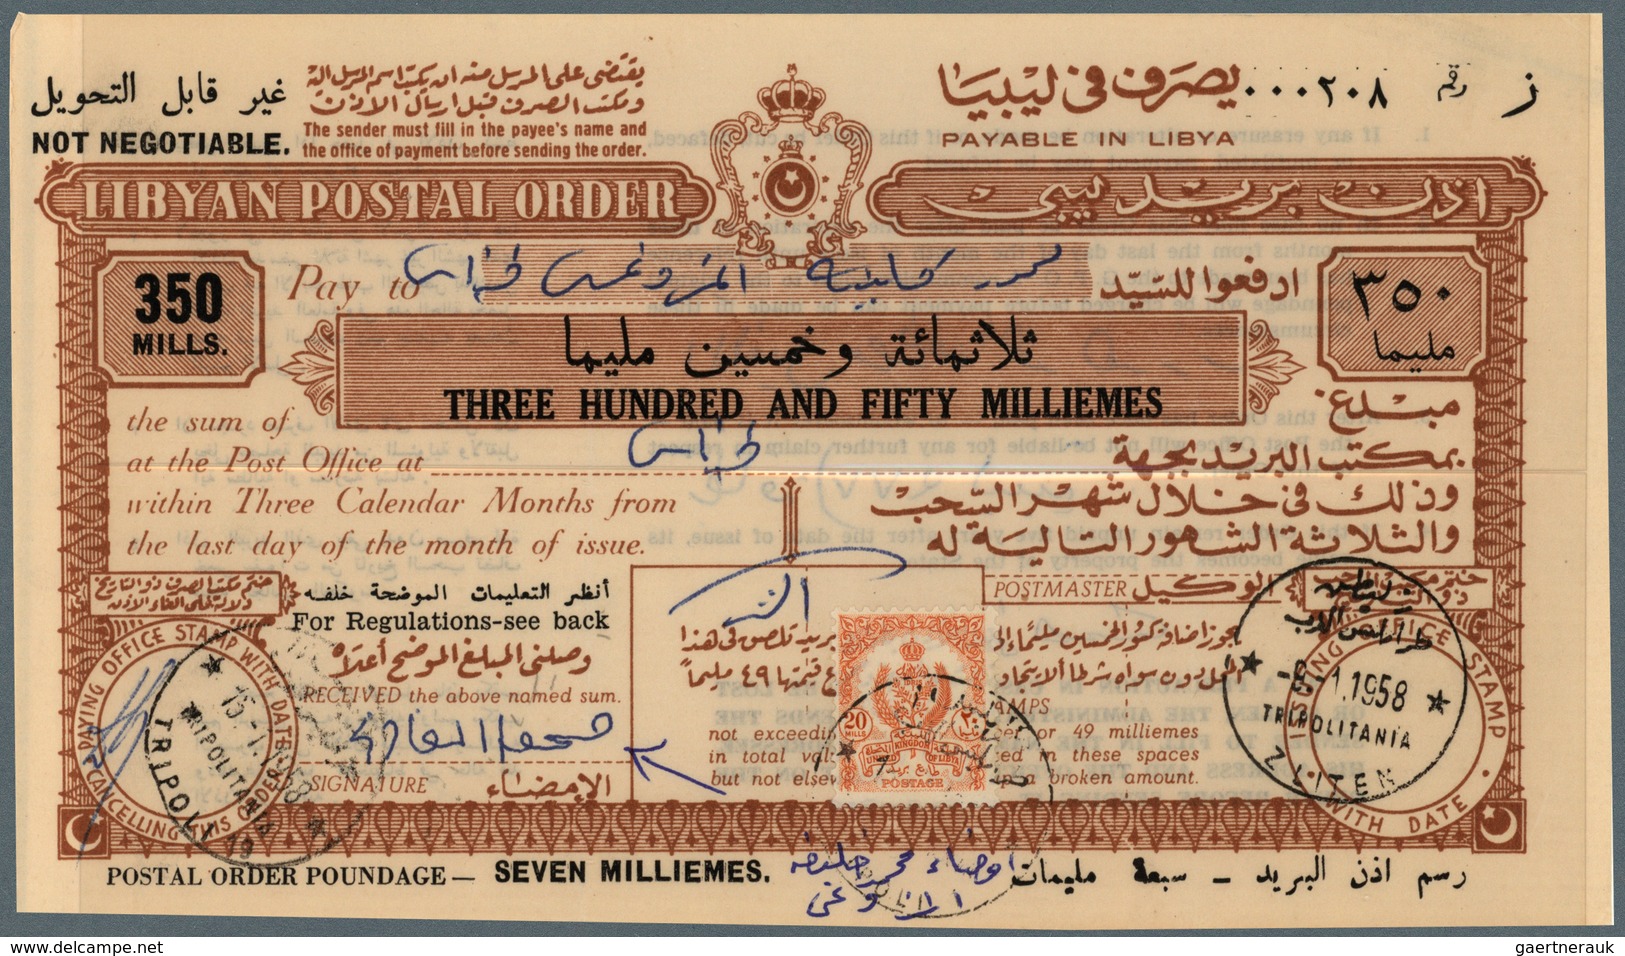 23496 Libyen: 1957 - 1959, wonderful lot of Libyan postal stationerys - Postal Orders - from 100 milliemès